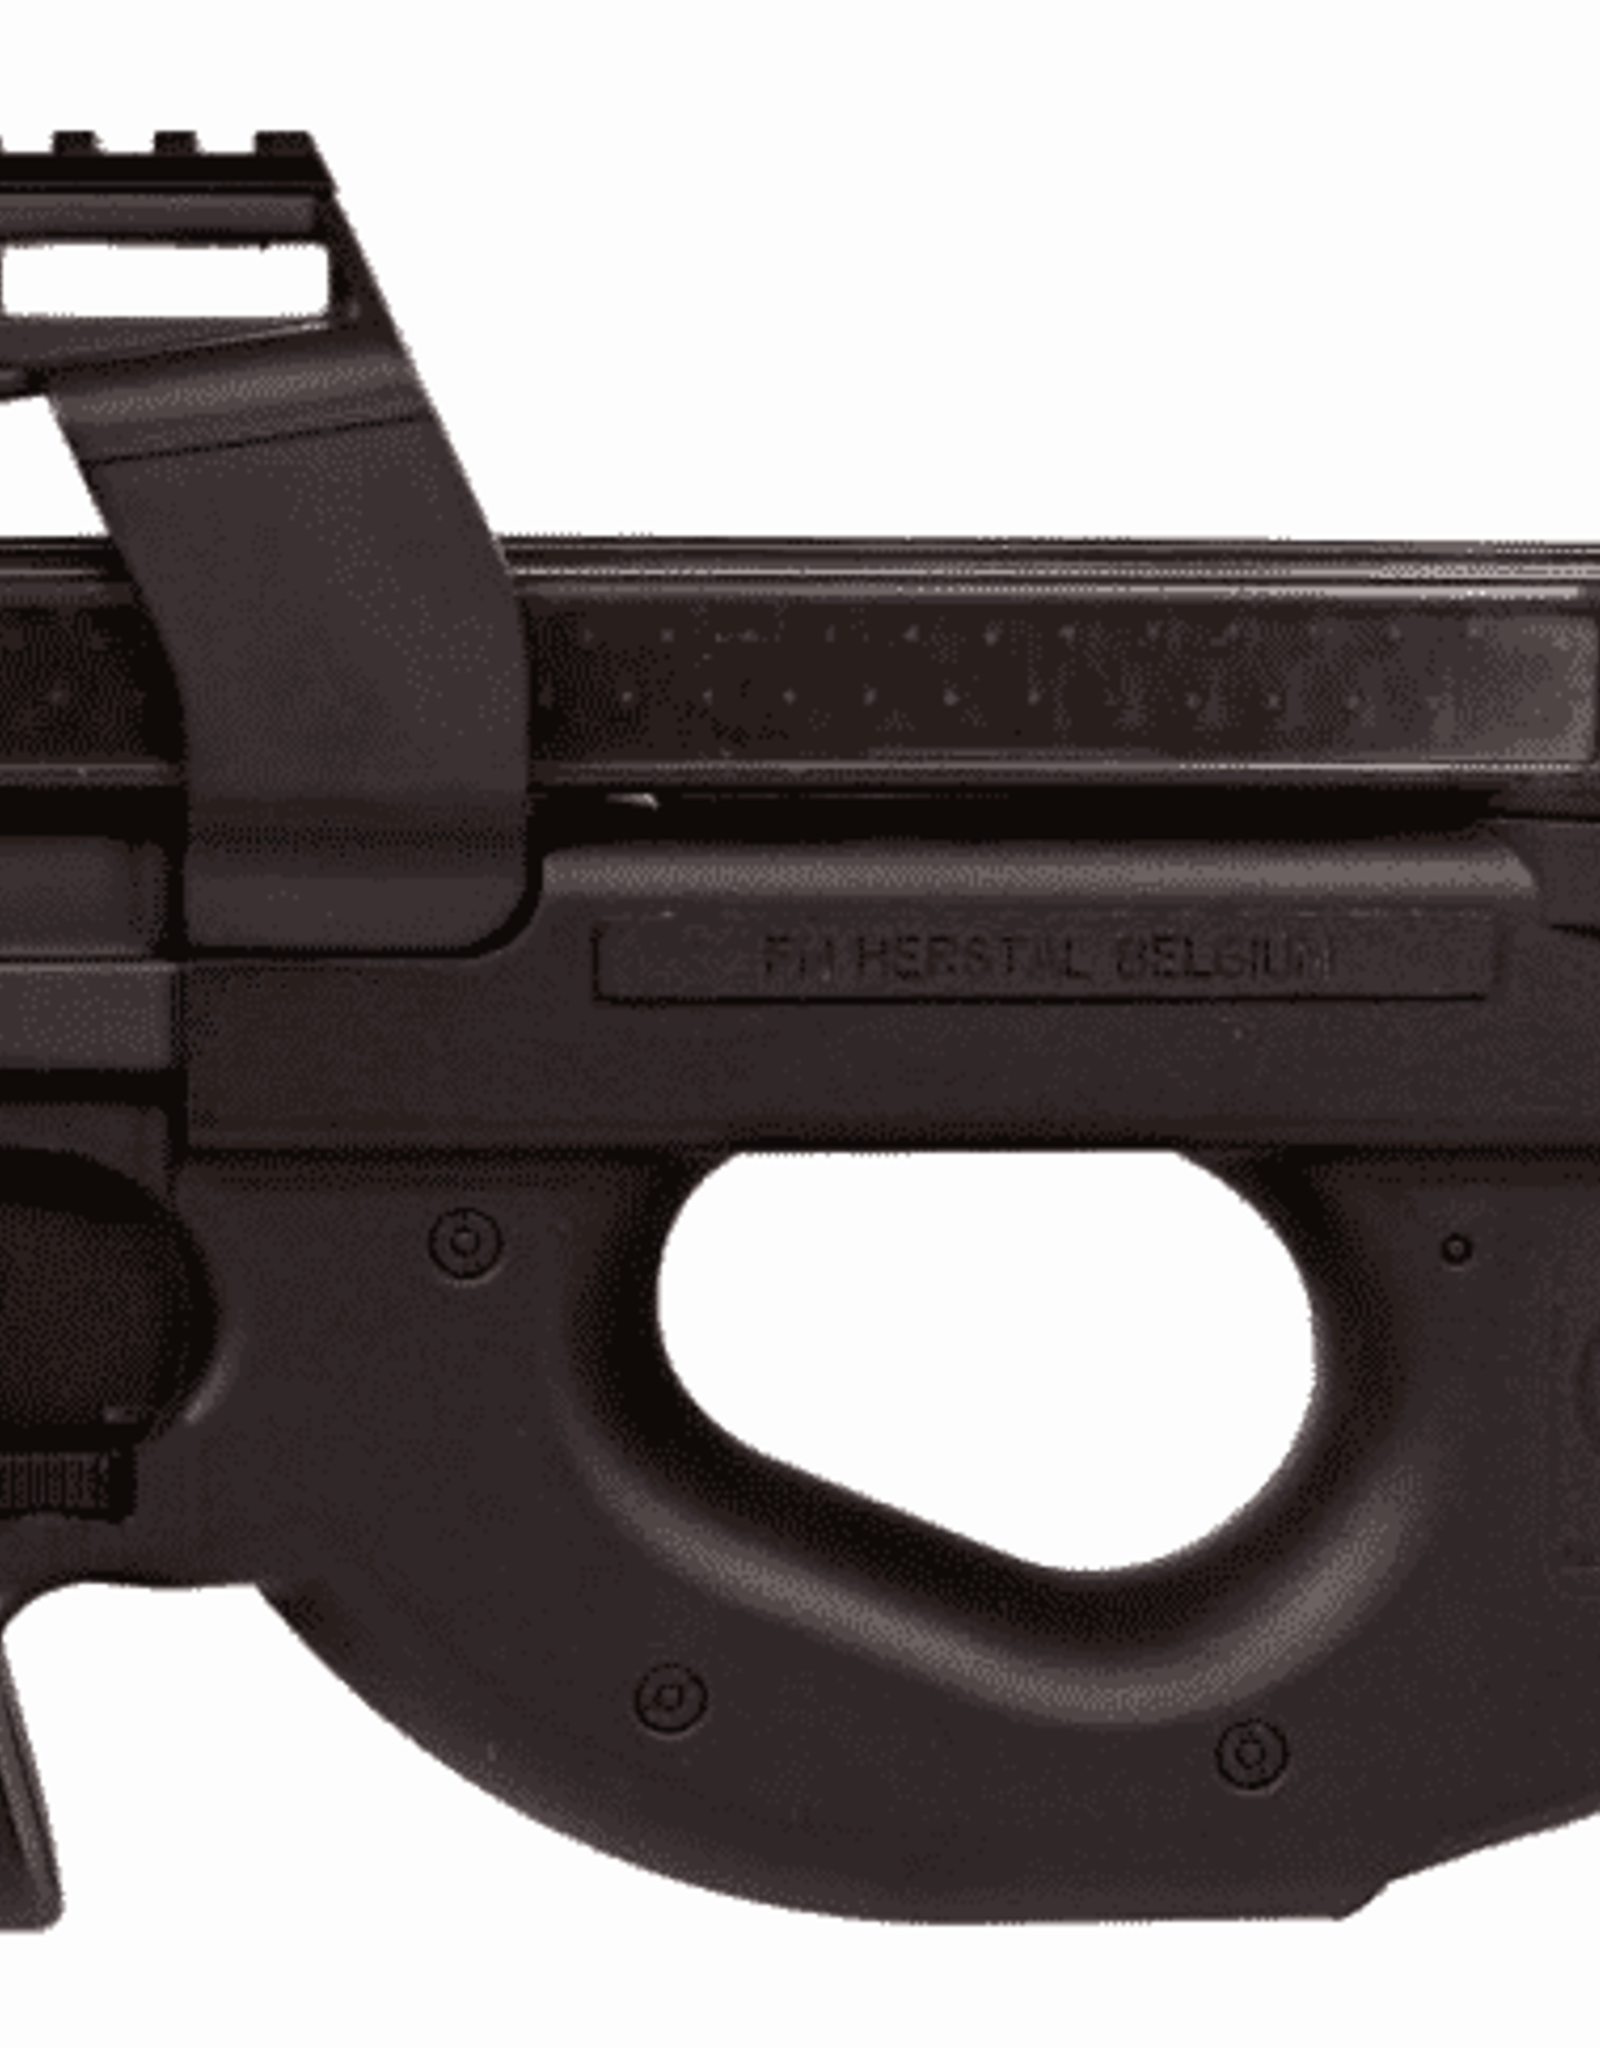 CYBERGUN Cybergun FN P90 AEG with Red Dot Sight, black